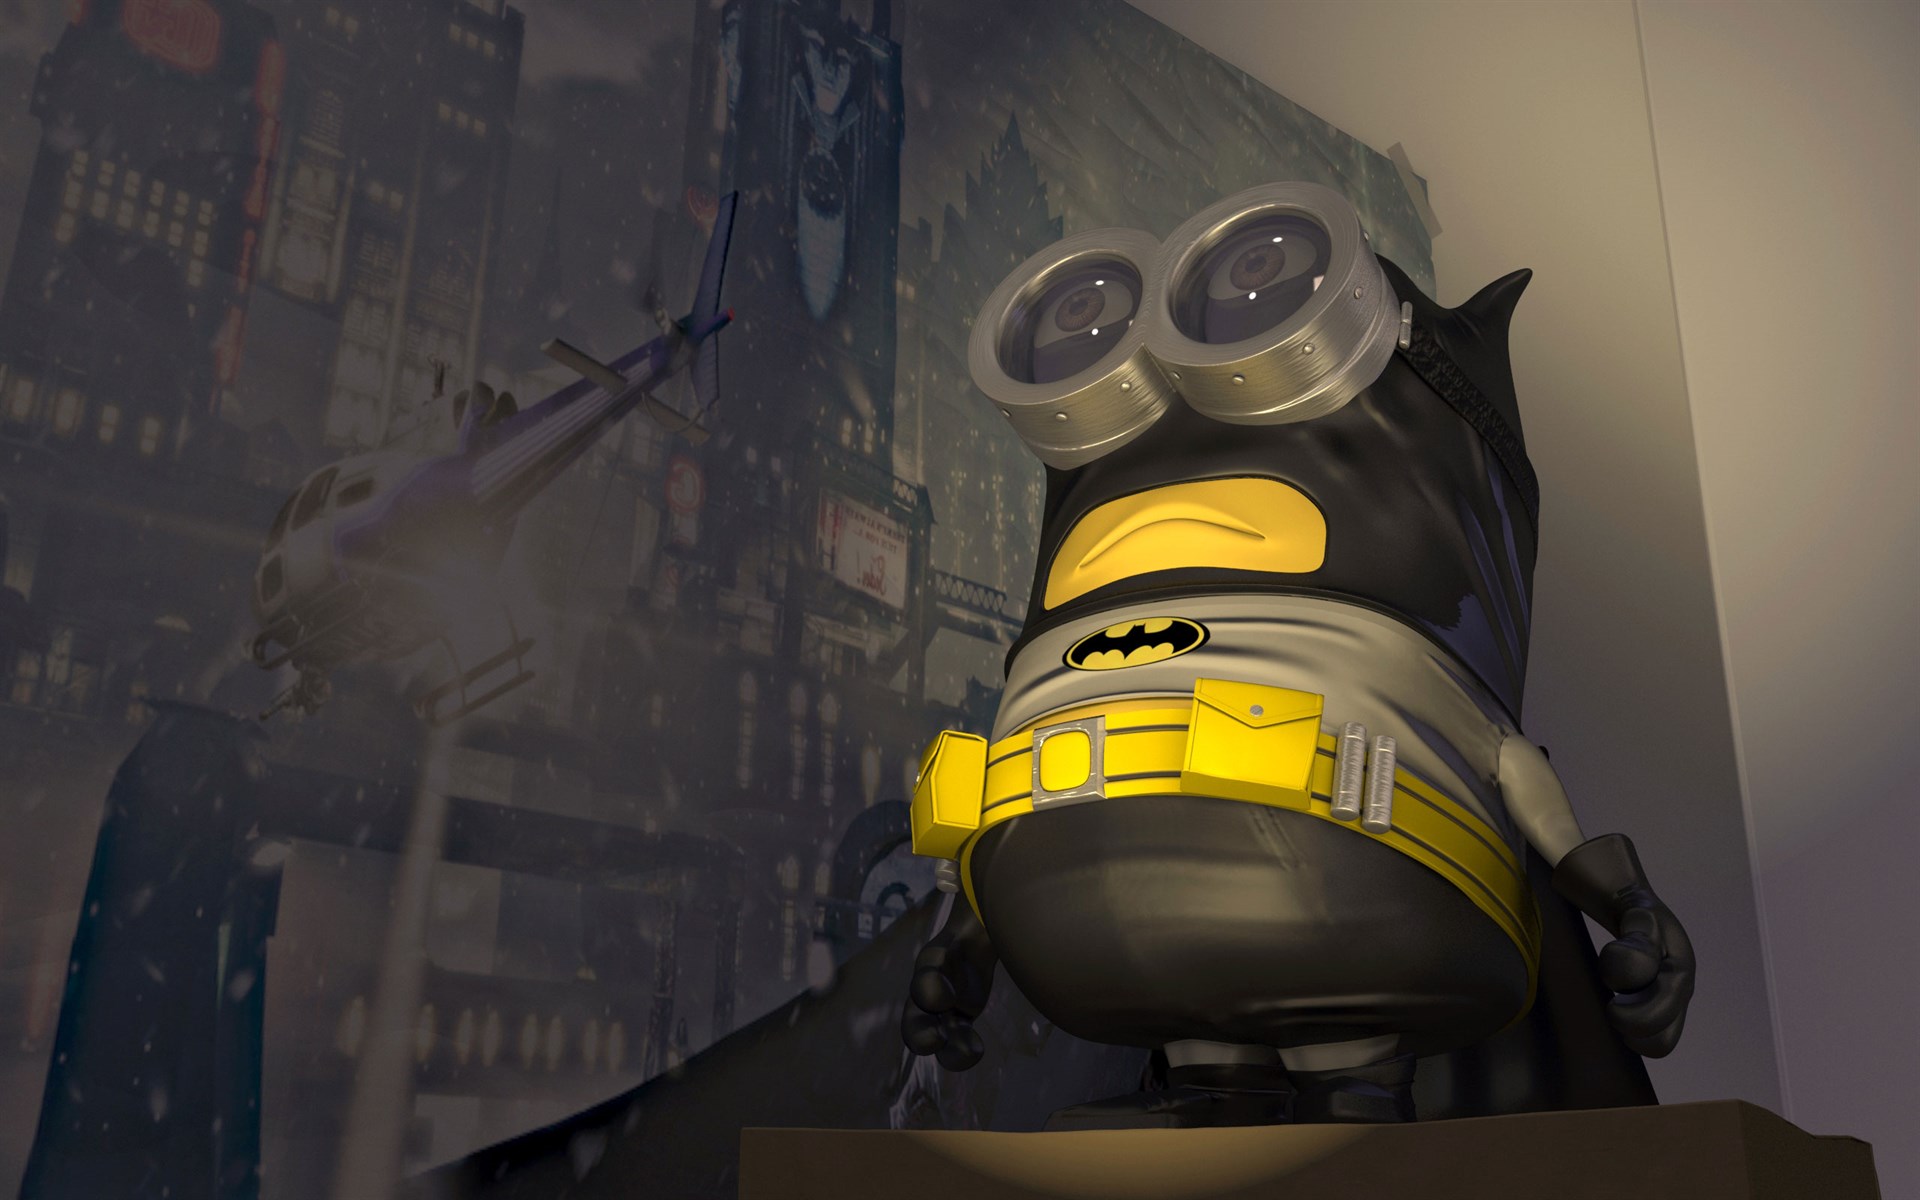 download wallpaper: Minion Batman wallpaper